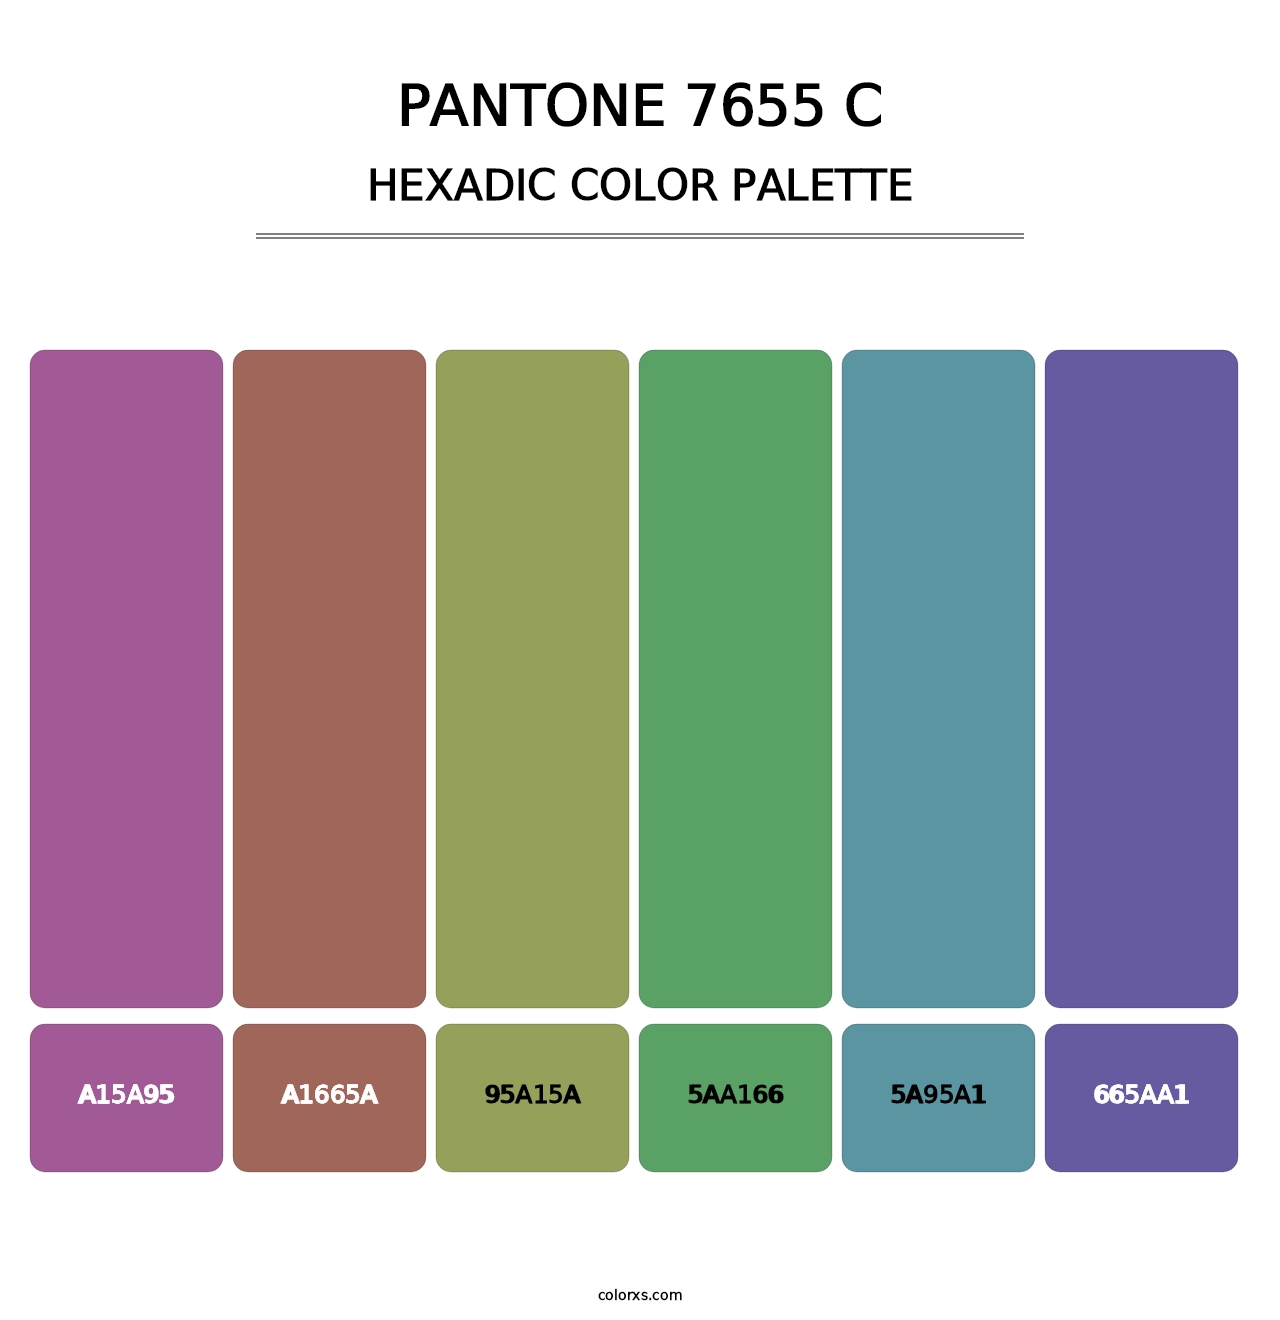 PANTONE 7655 C - Hexadic Color Palette